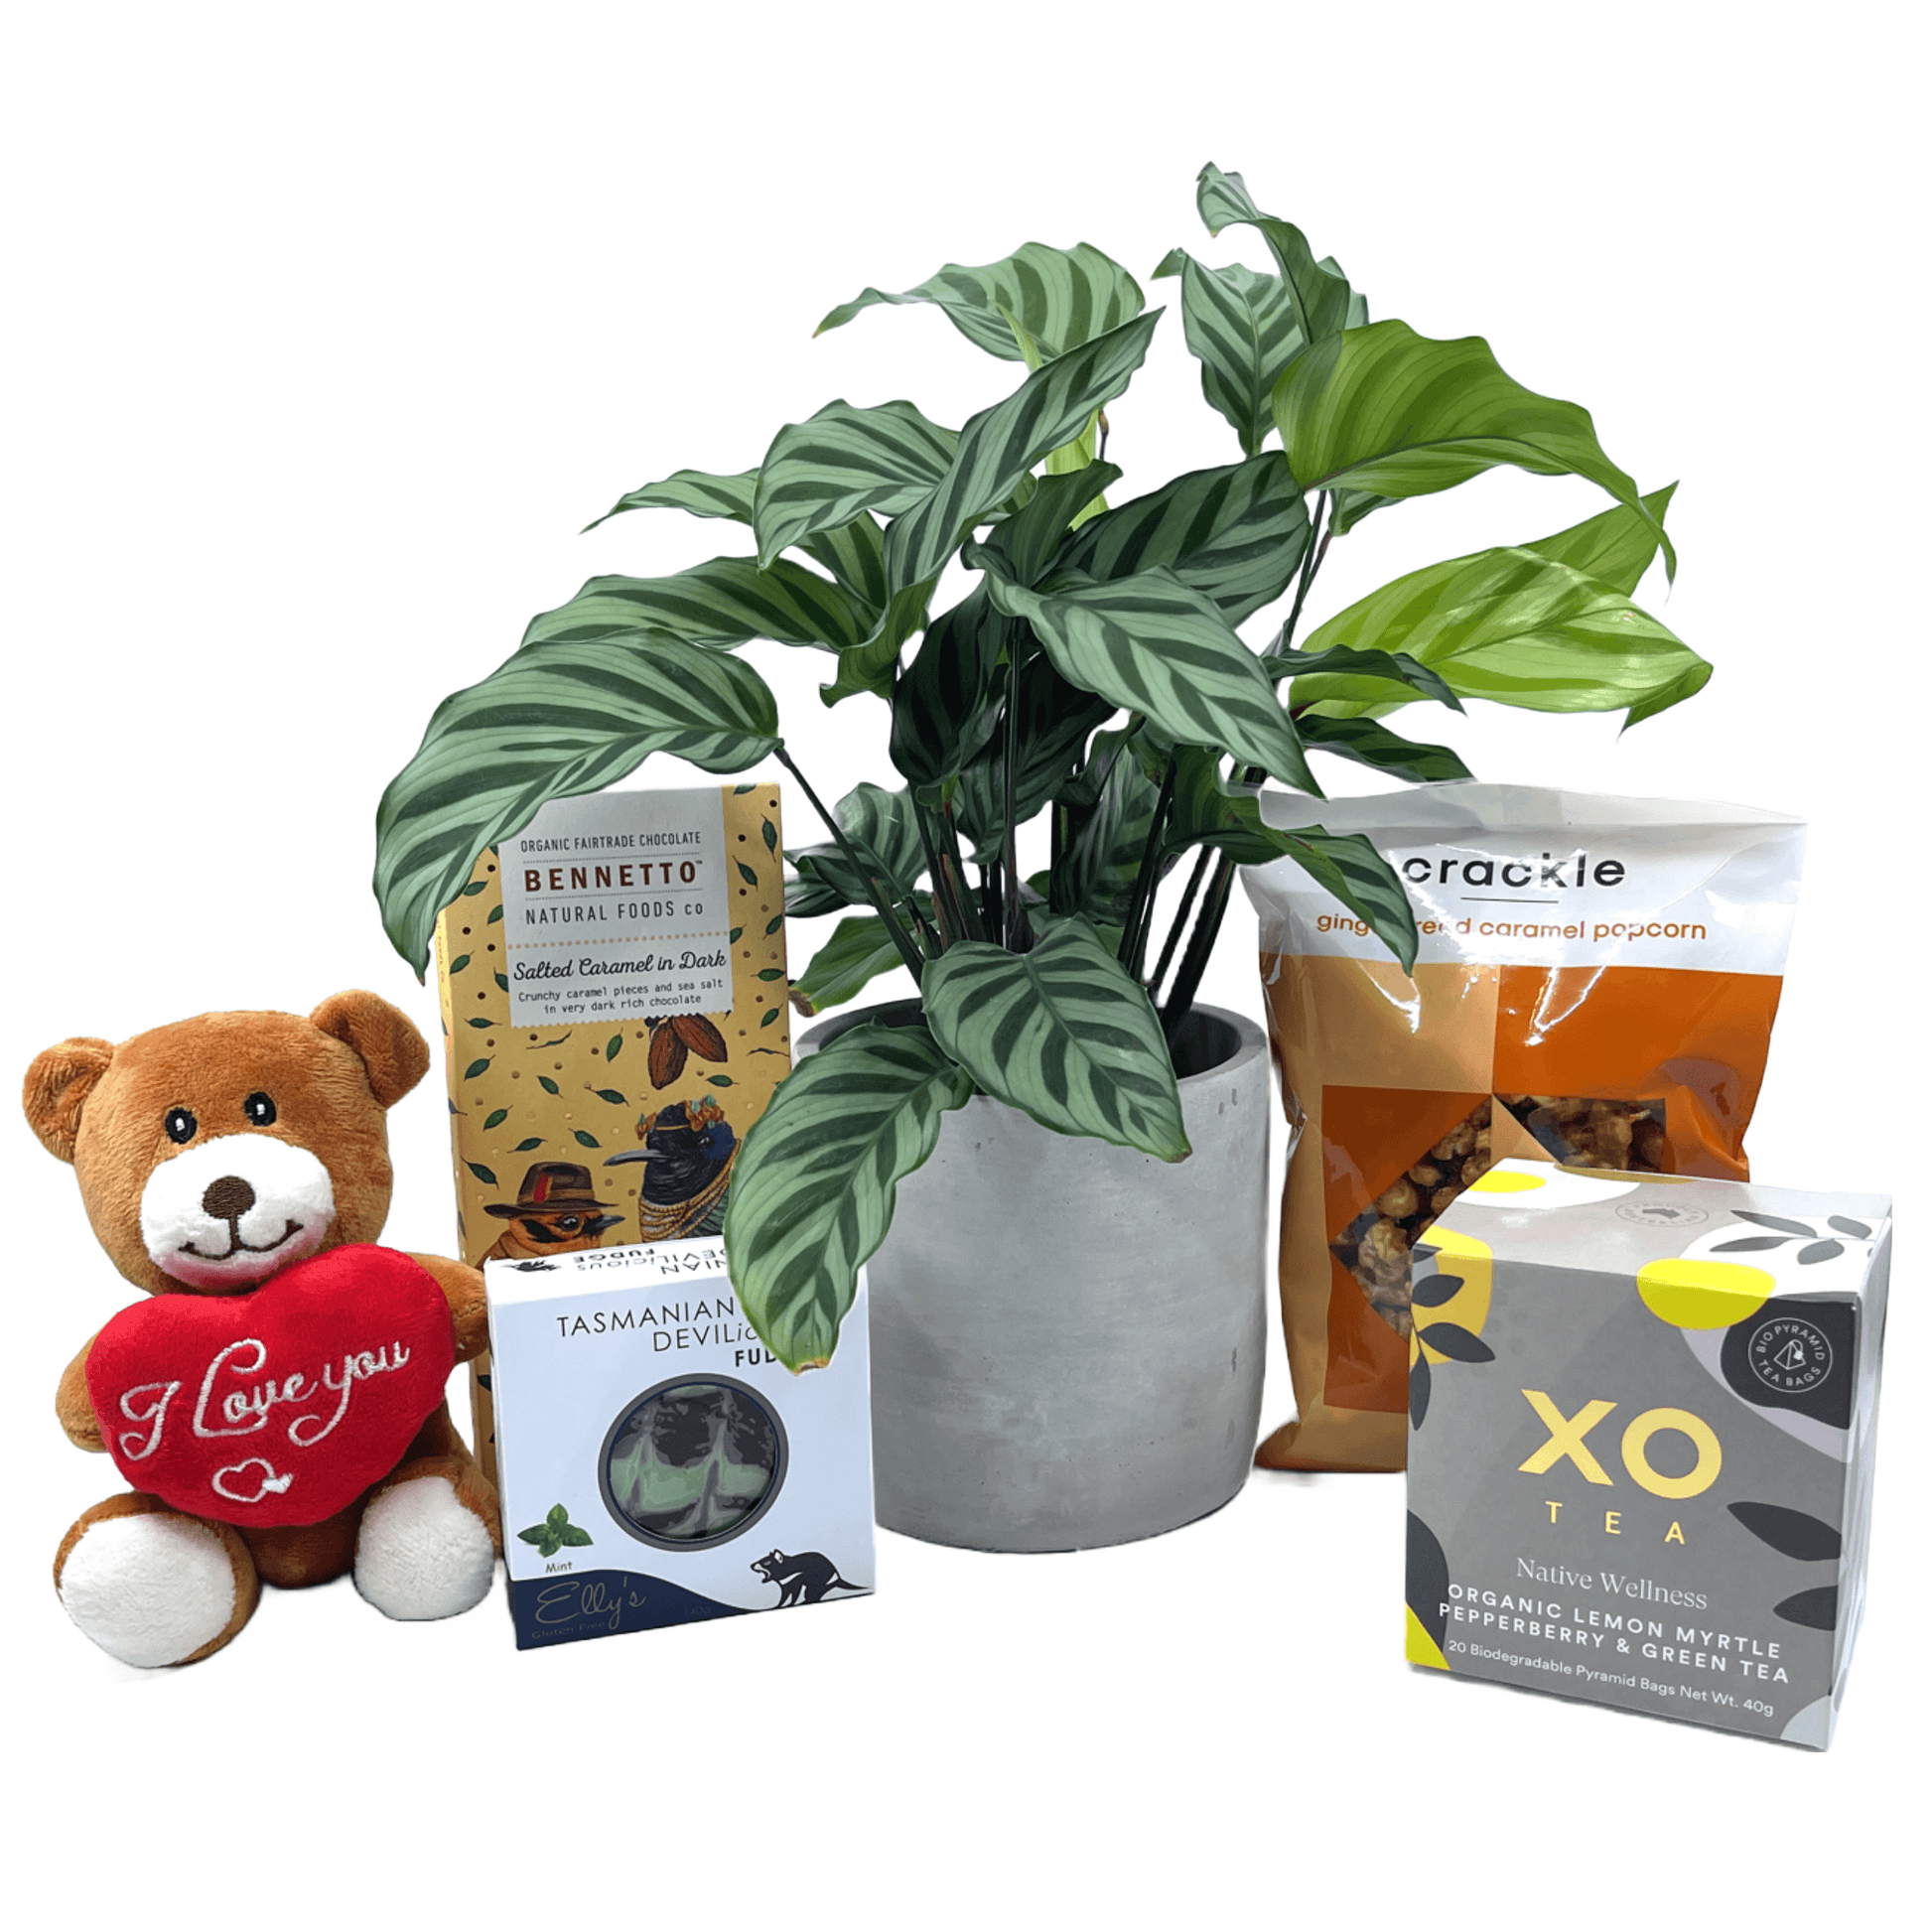 I Love You Gift Box - The Plant Buddies